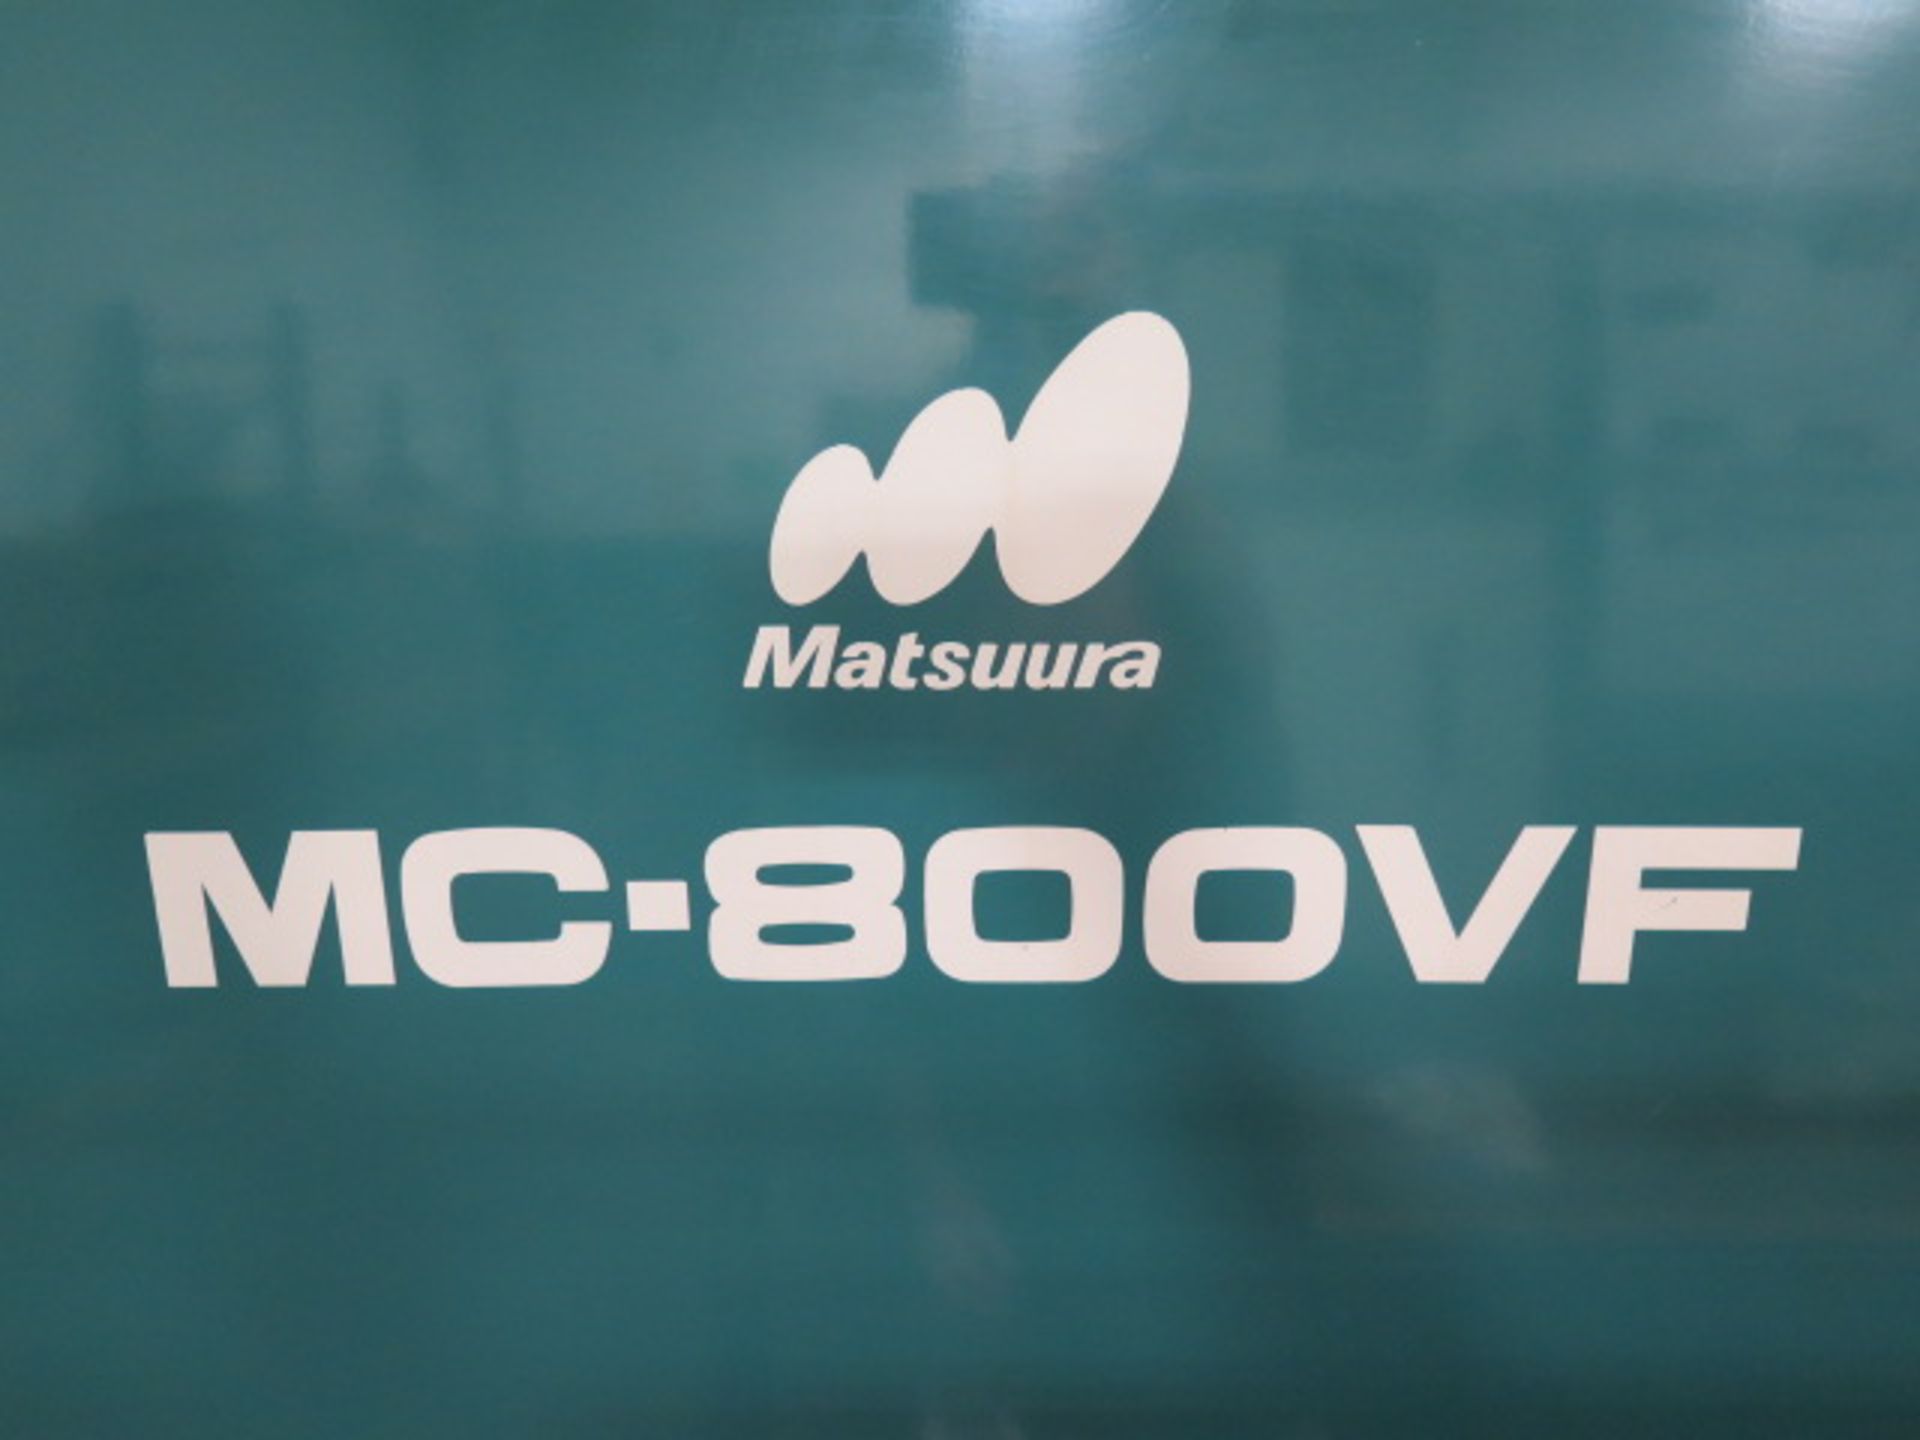 1993 Matsuura MC-800VF CNC Vertical Machining Center s/n 930210084 w/ Yasnac i-80 Controls, 30-Stat - Image 4 of 22